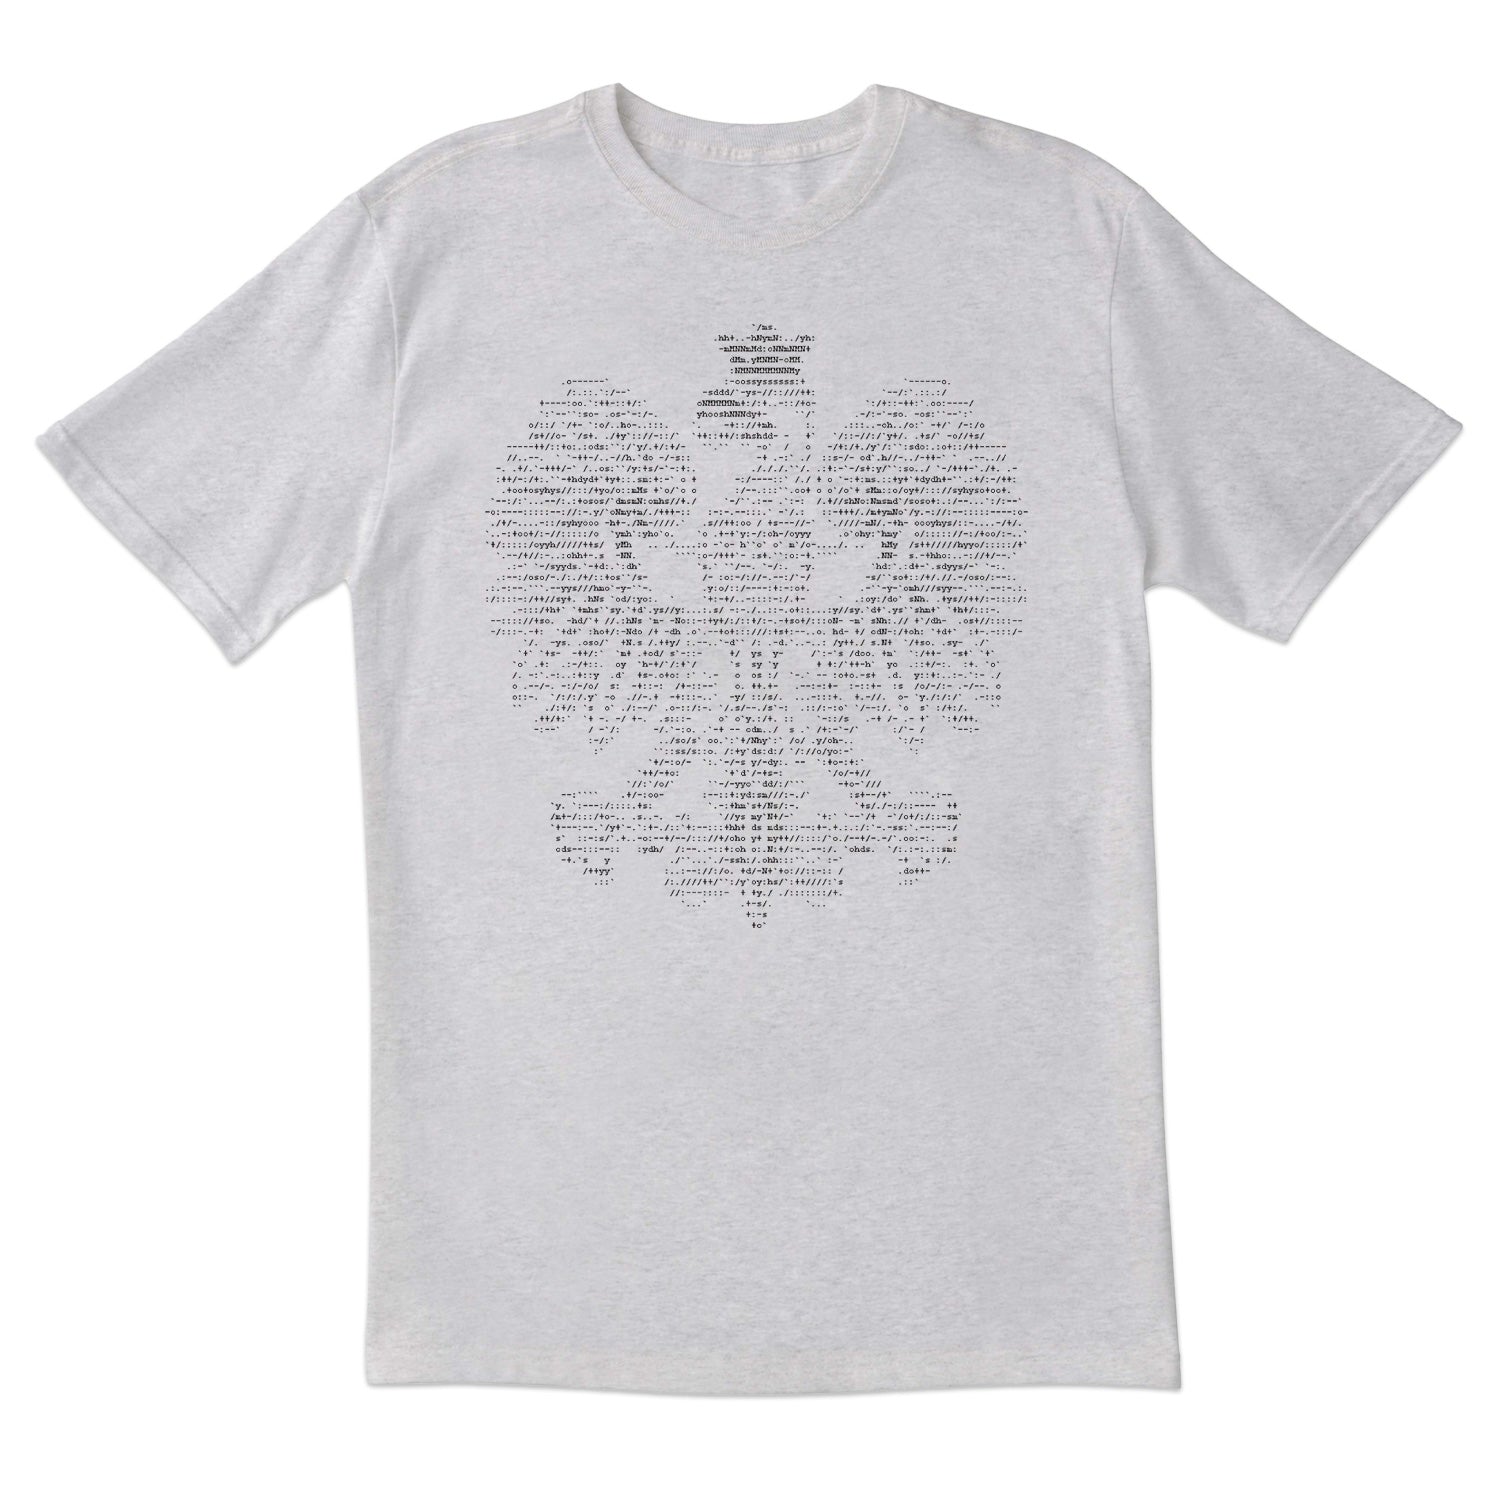 White Eagle In ASCII Code Short Sleeve Tshirt